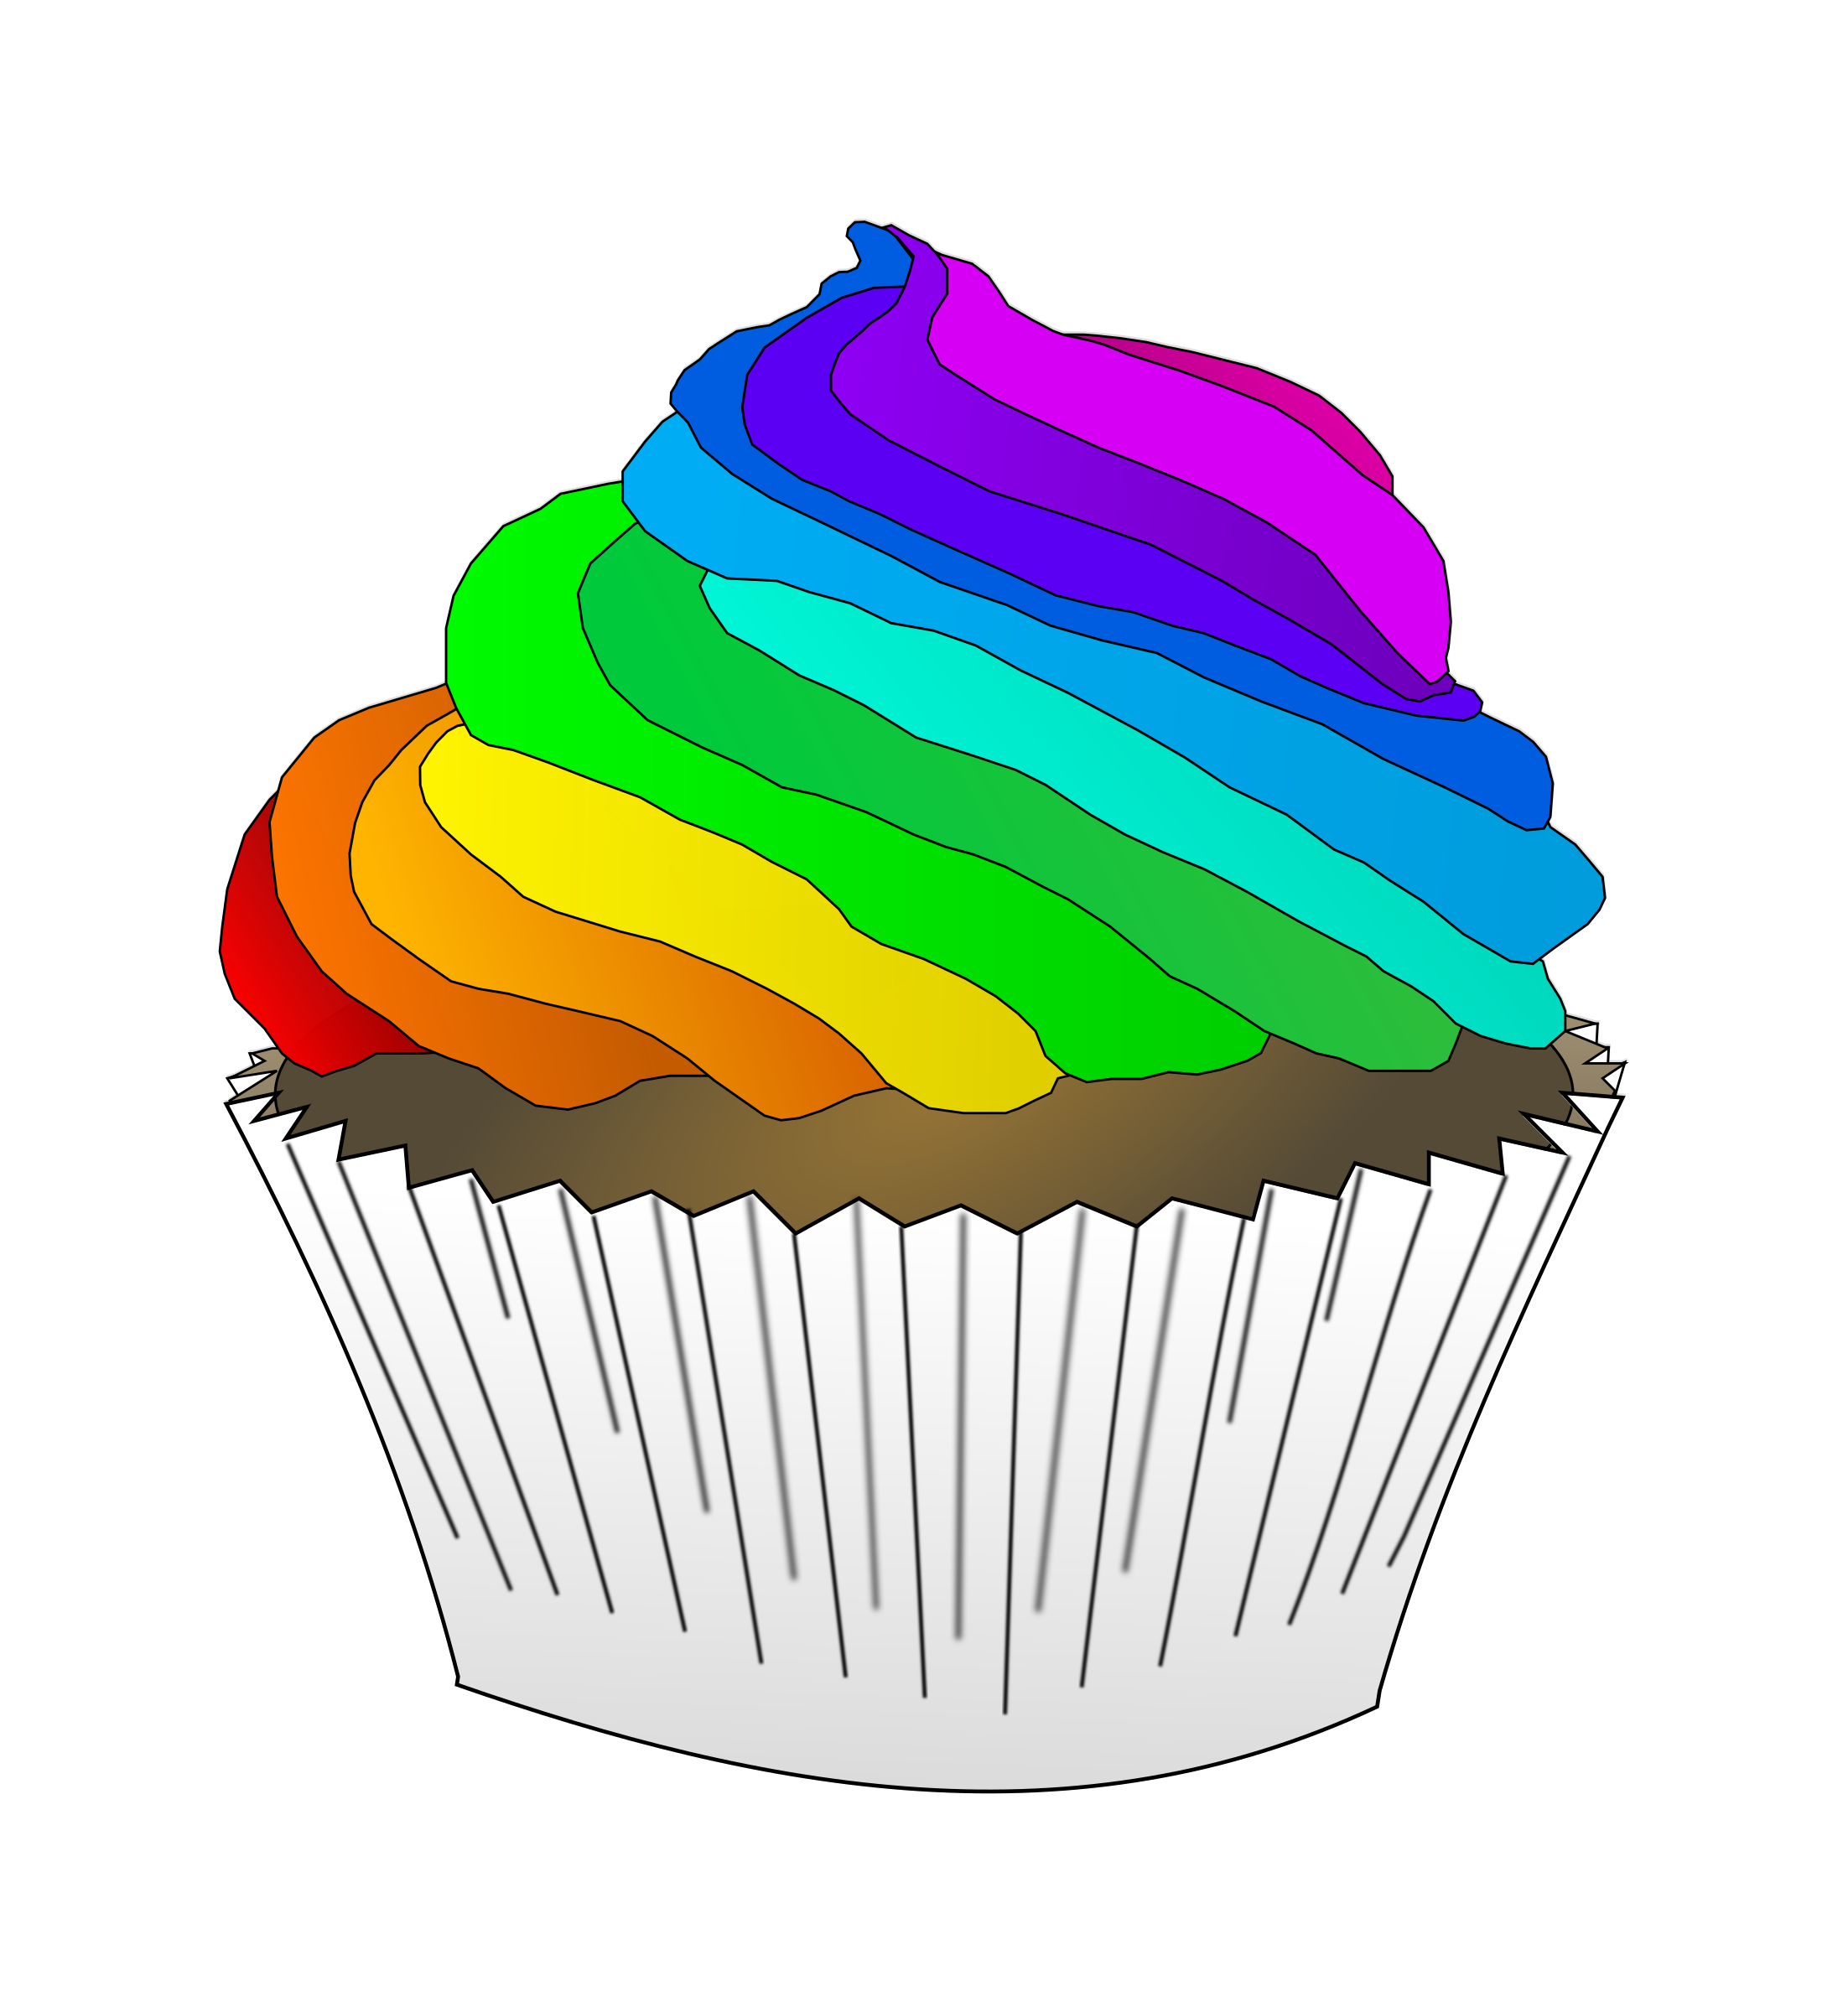 Cupcakes clipart cake sale. Chocolate rainbow cupcake big